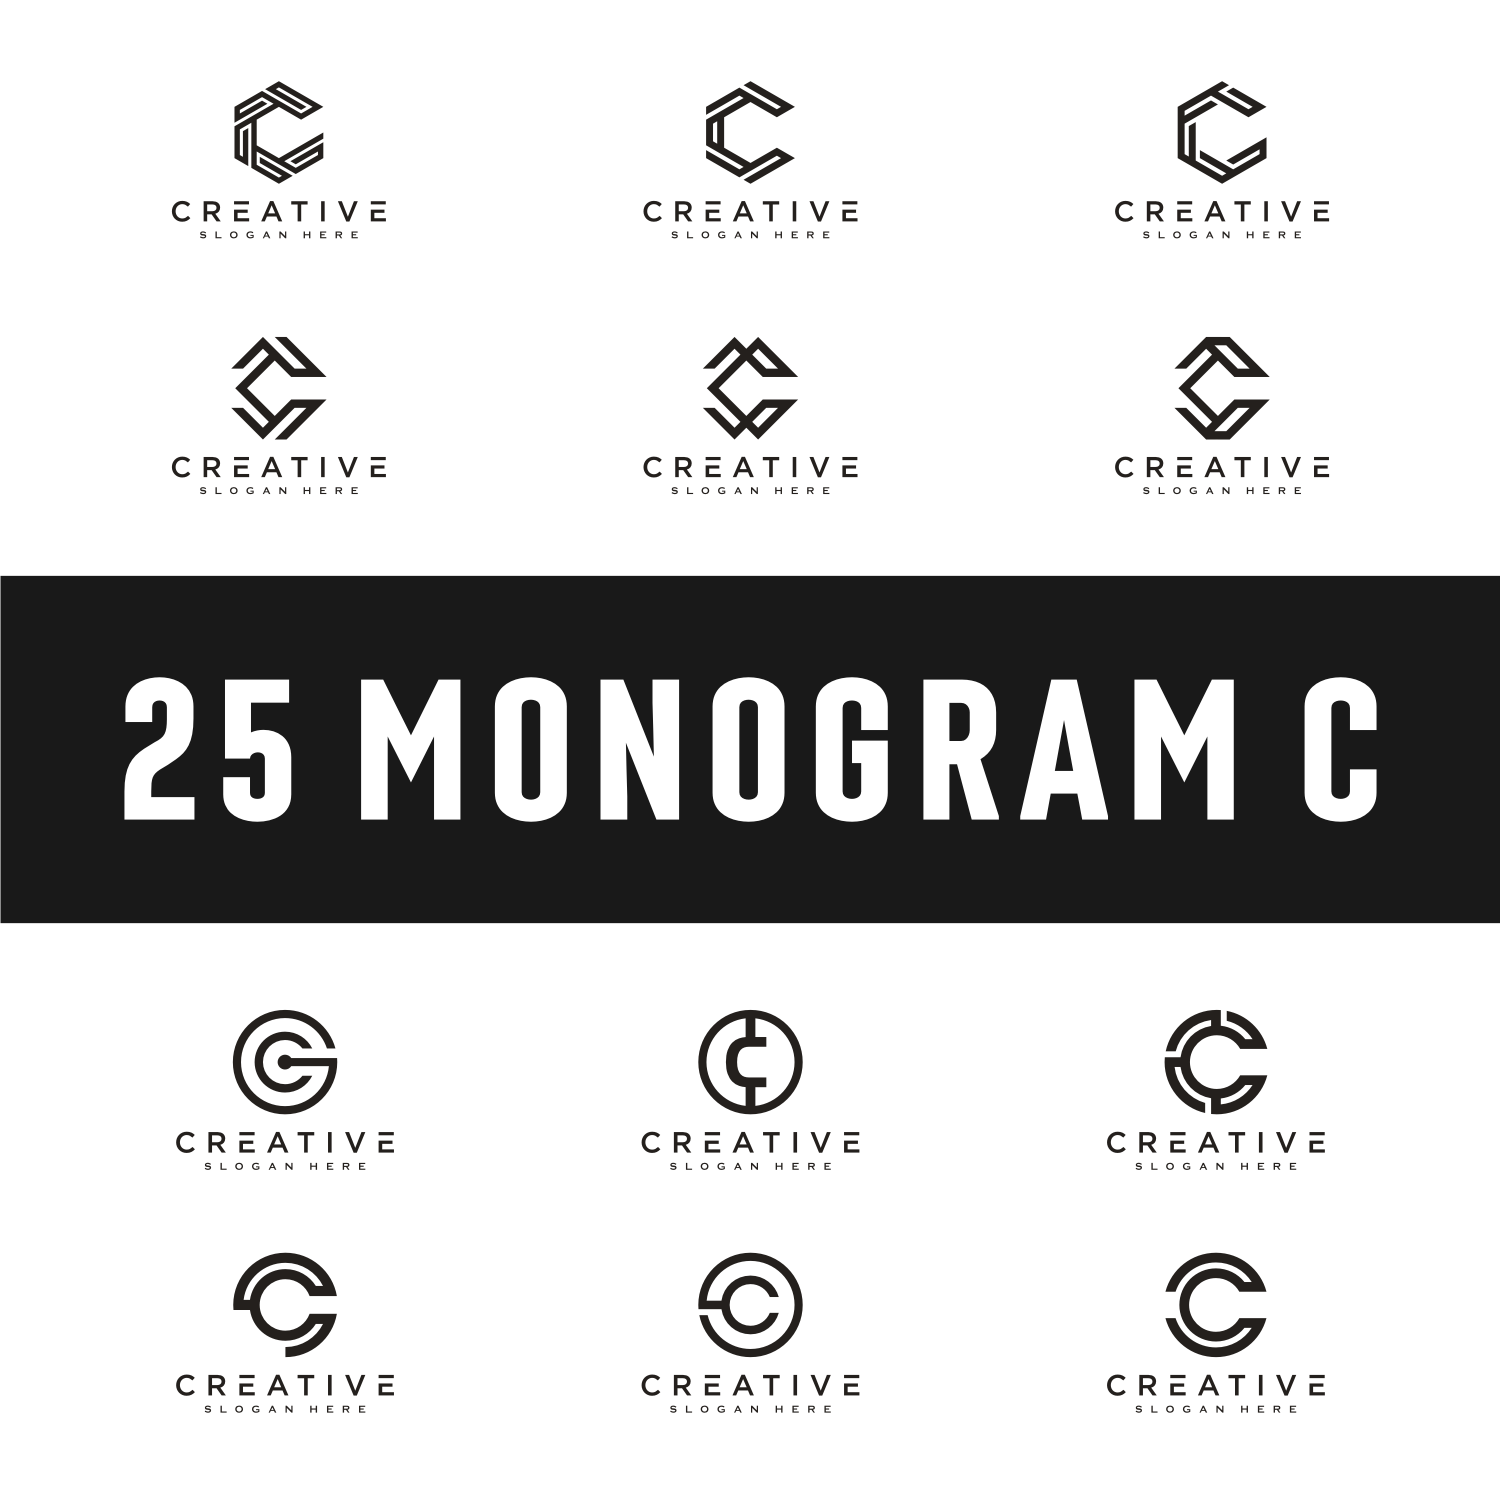 Set of 25 Initial Letter C Logo Design Vector cover image.